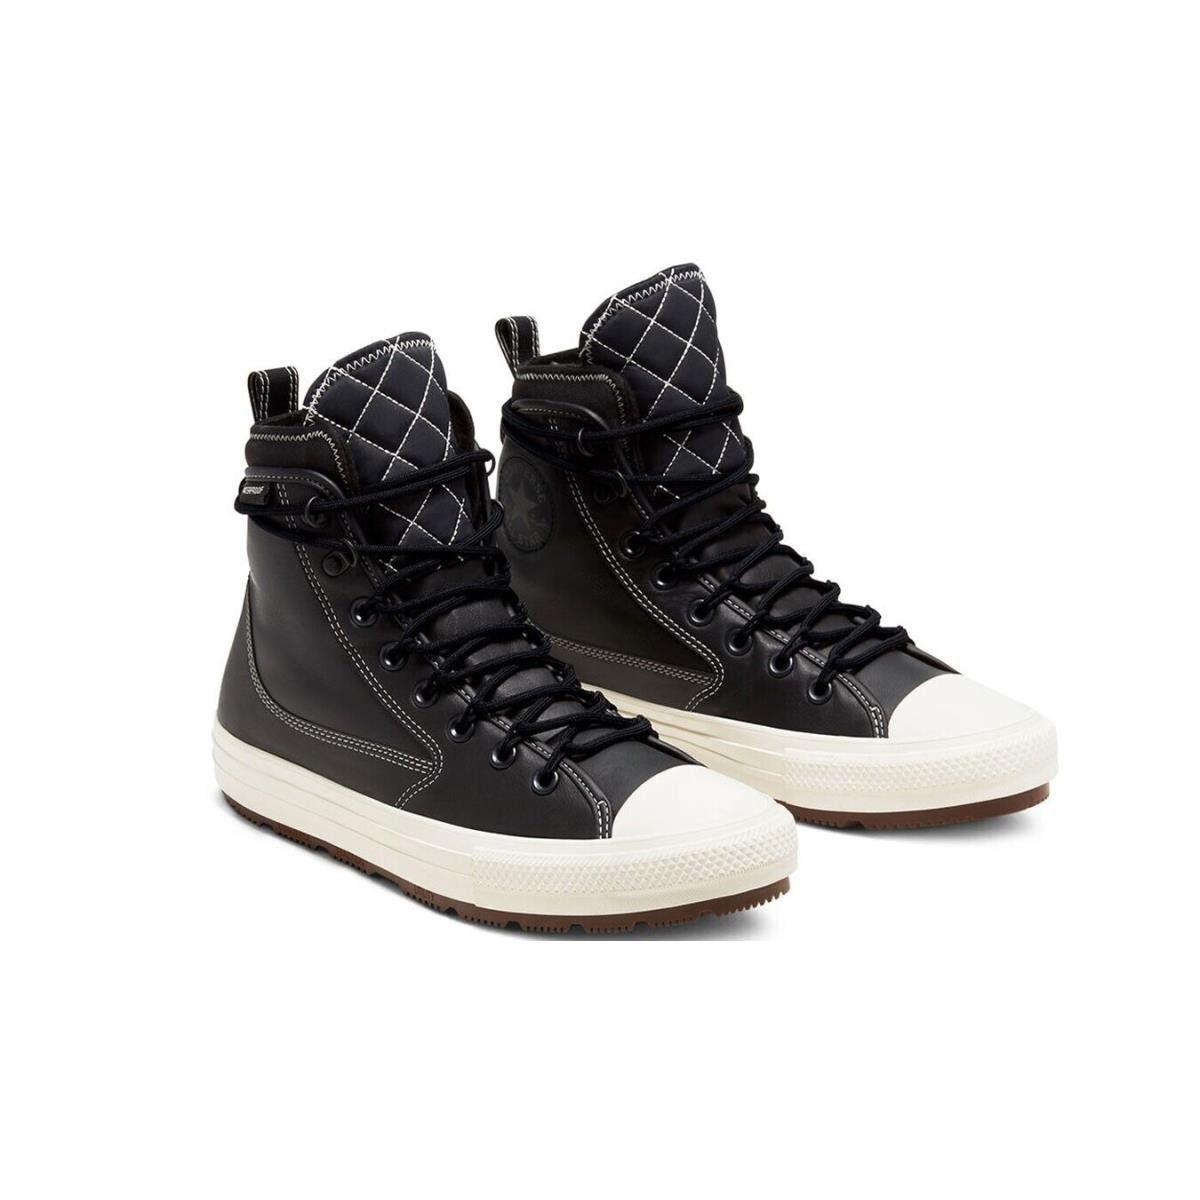 Converse Boots Men Size 9 All Terrain HI Waterproof Leather Shoes 168863C Black